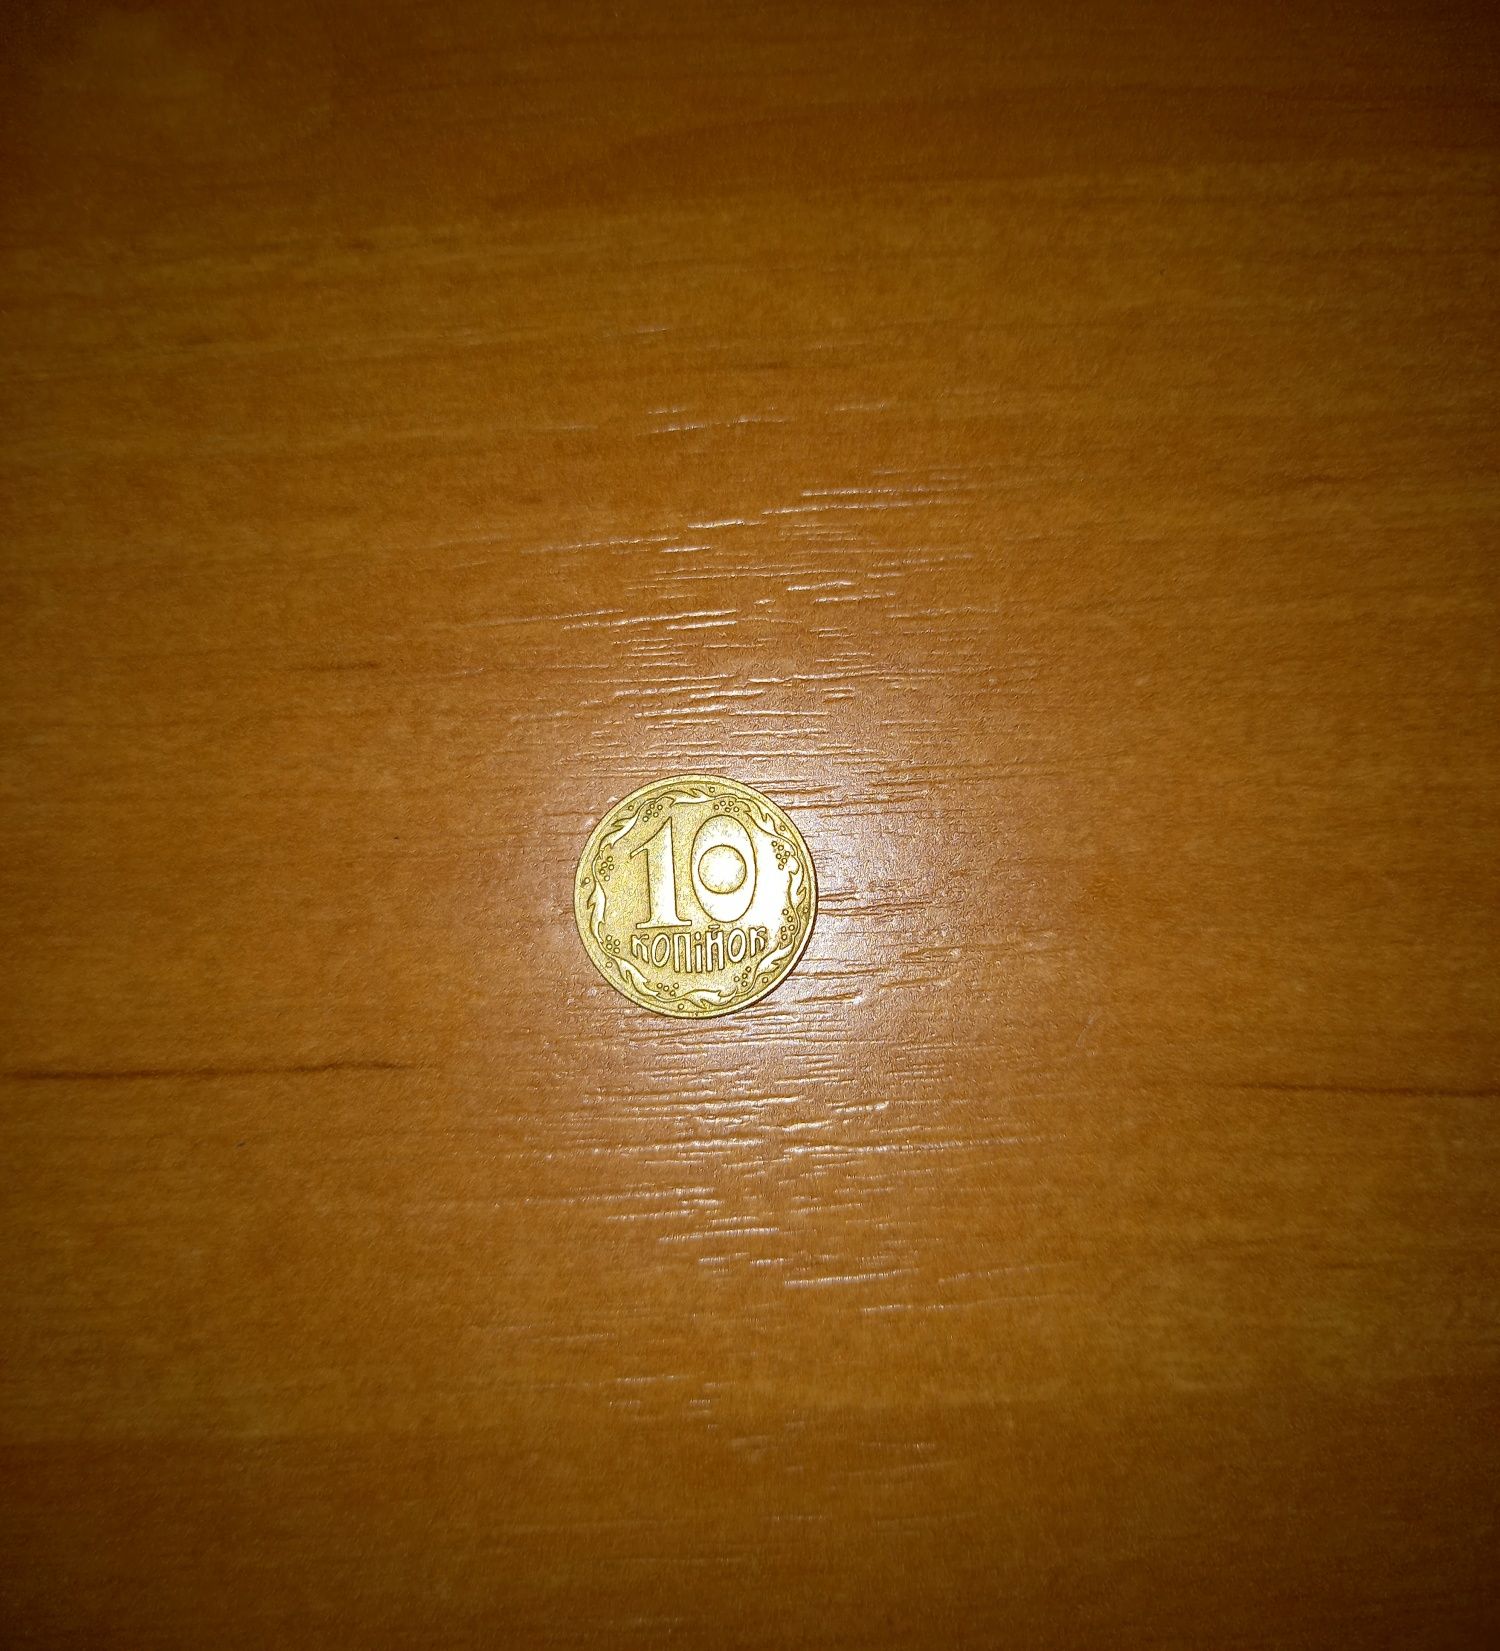 Продам монету 1992 года  СРОЧНО